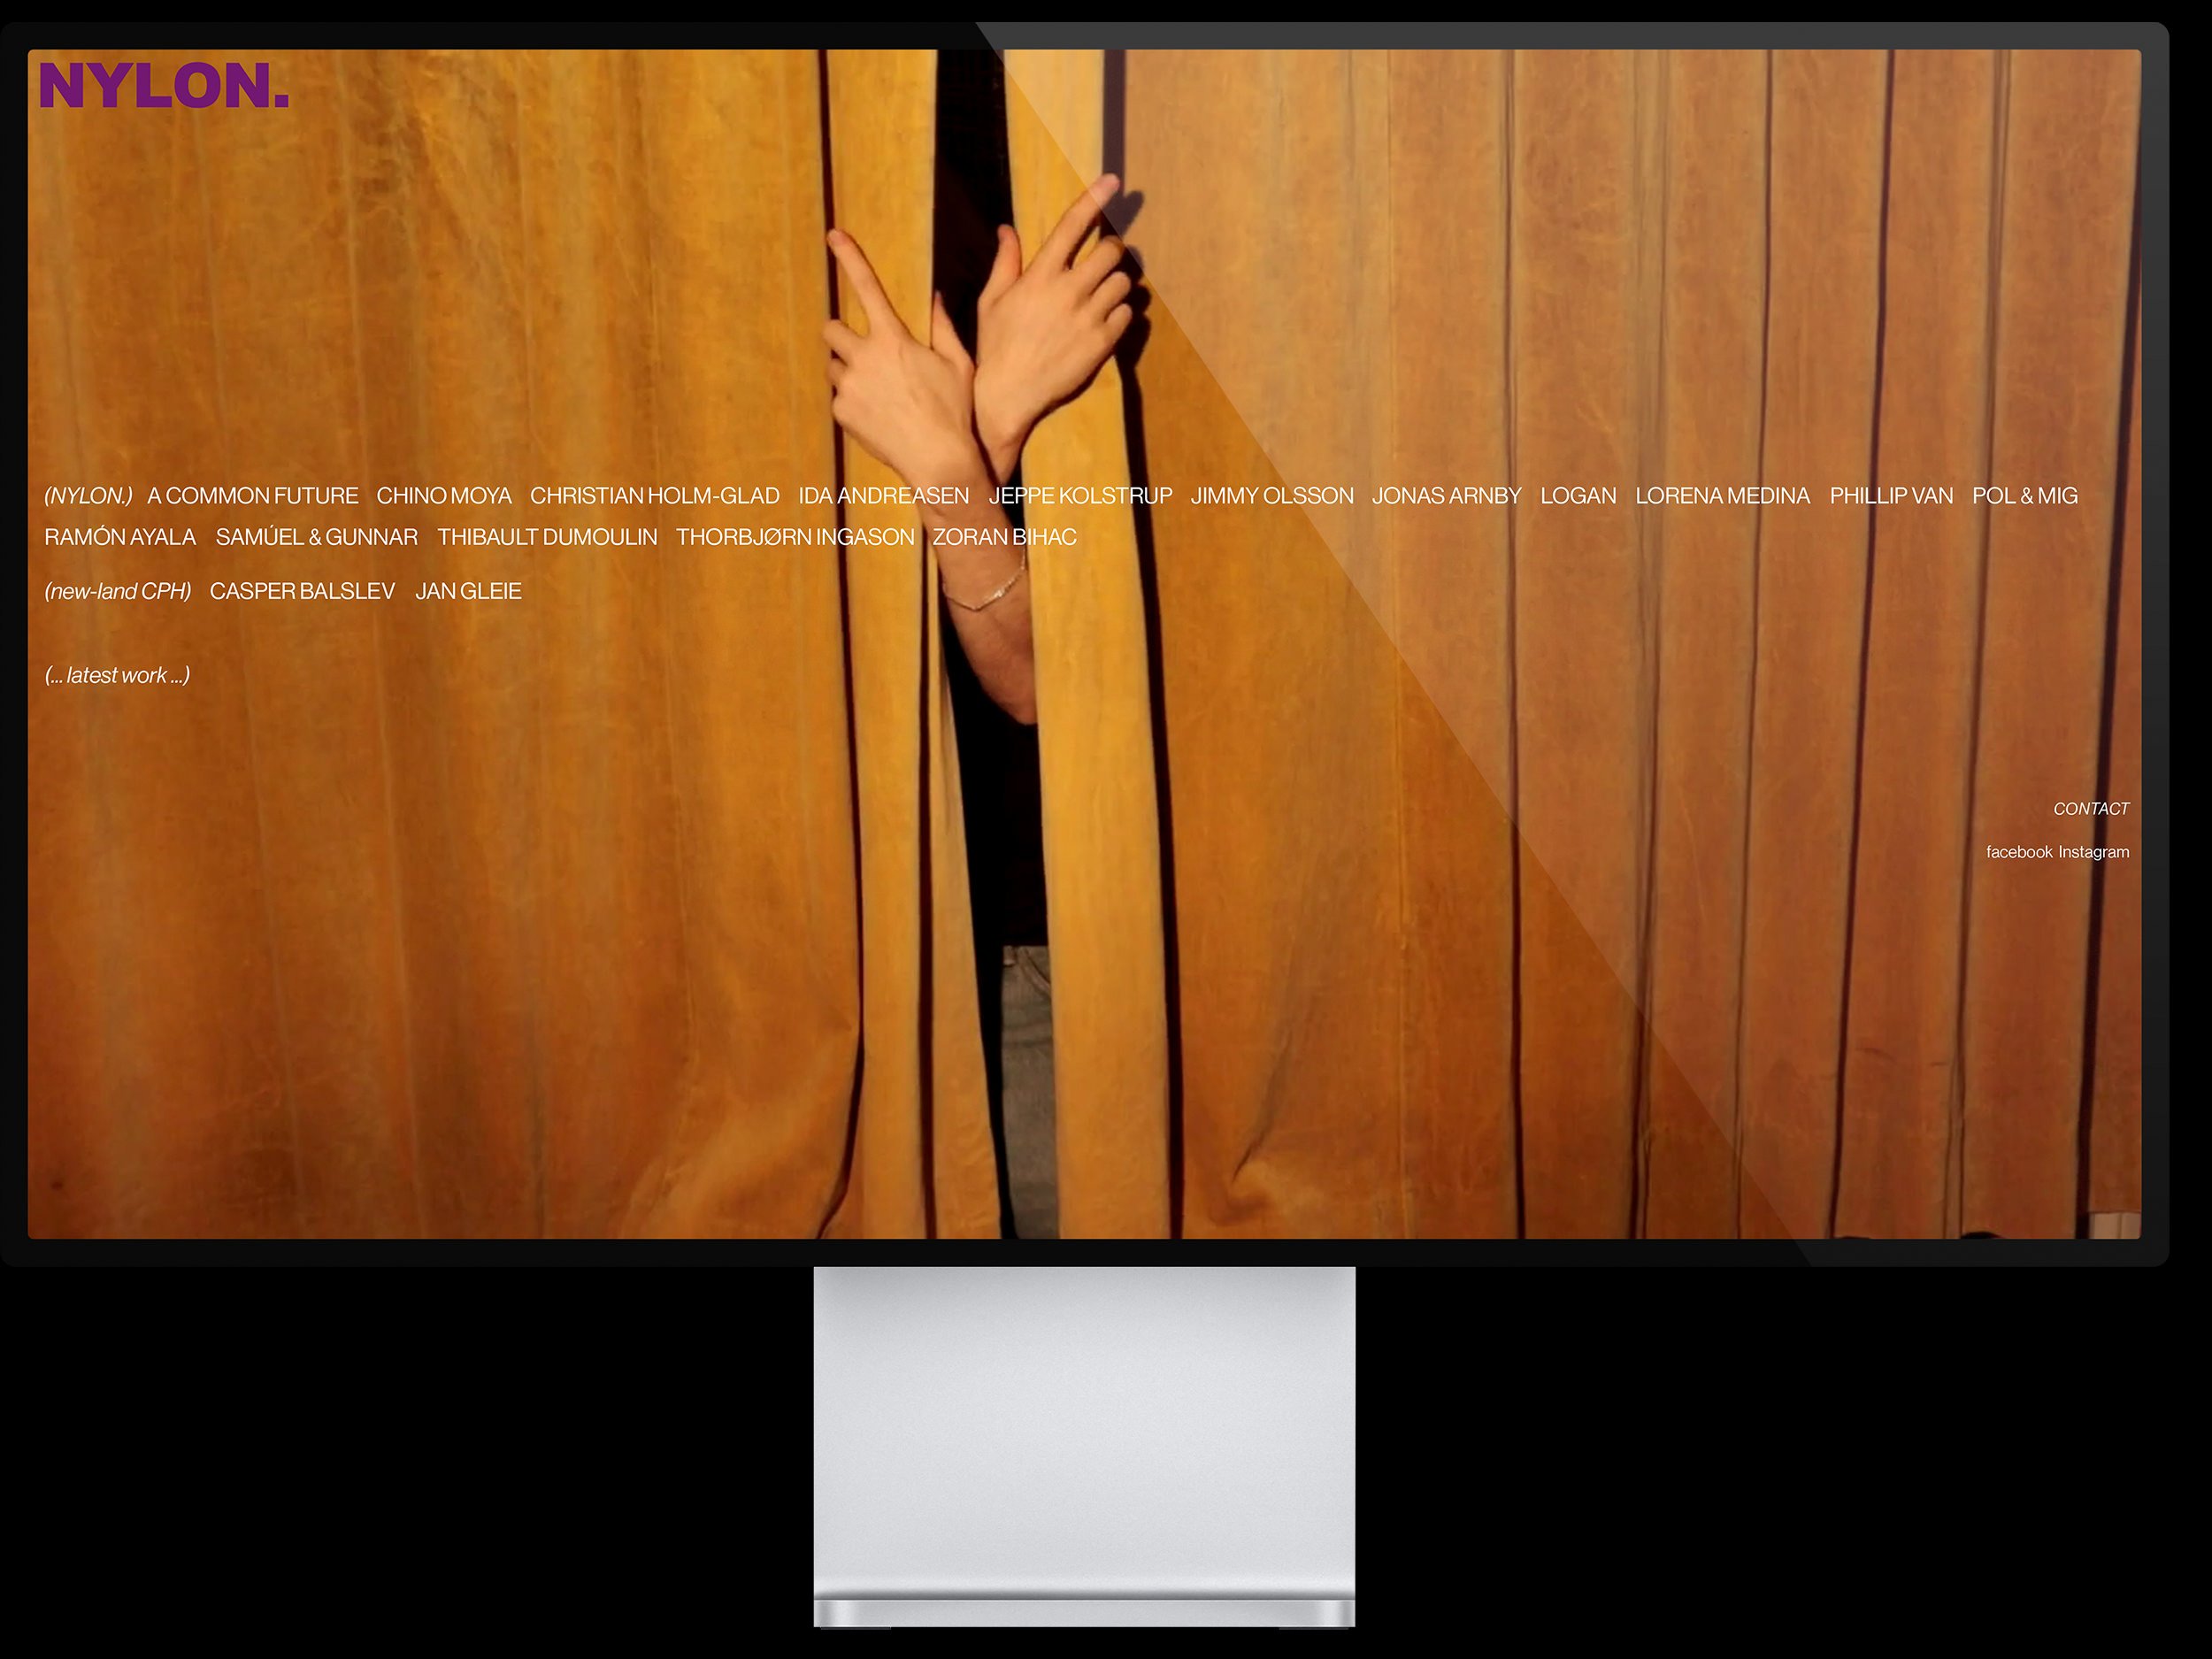 Marc-Perino_Web-Design_nylon-film_Pro-Display-XDR_005.jpg